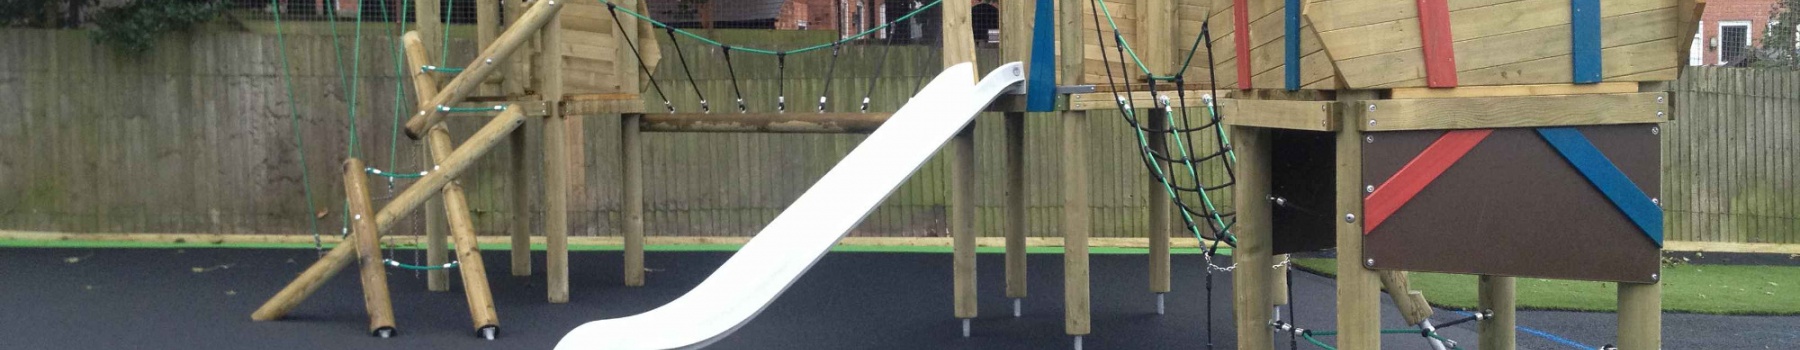 school playground surfaces